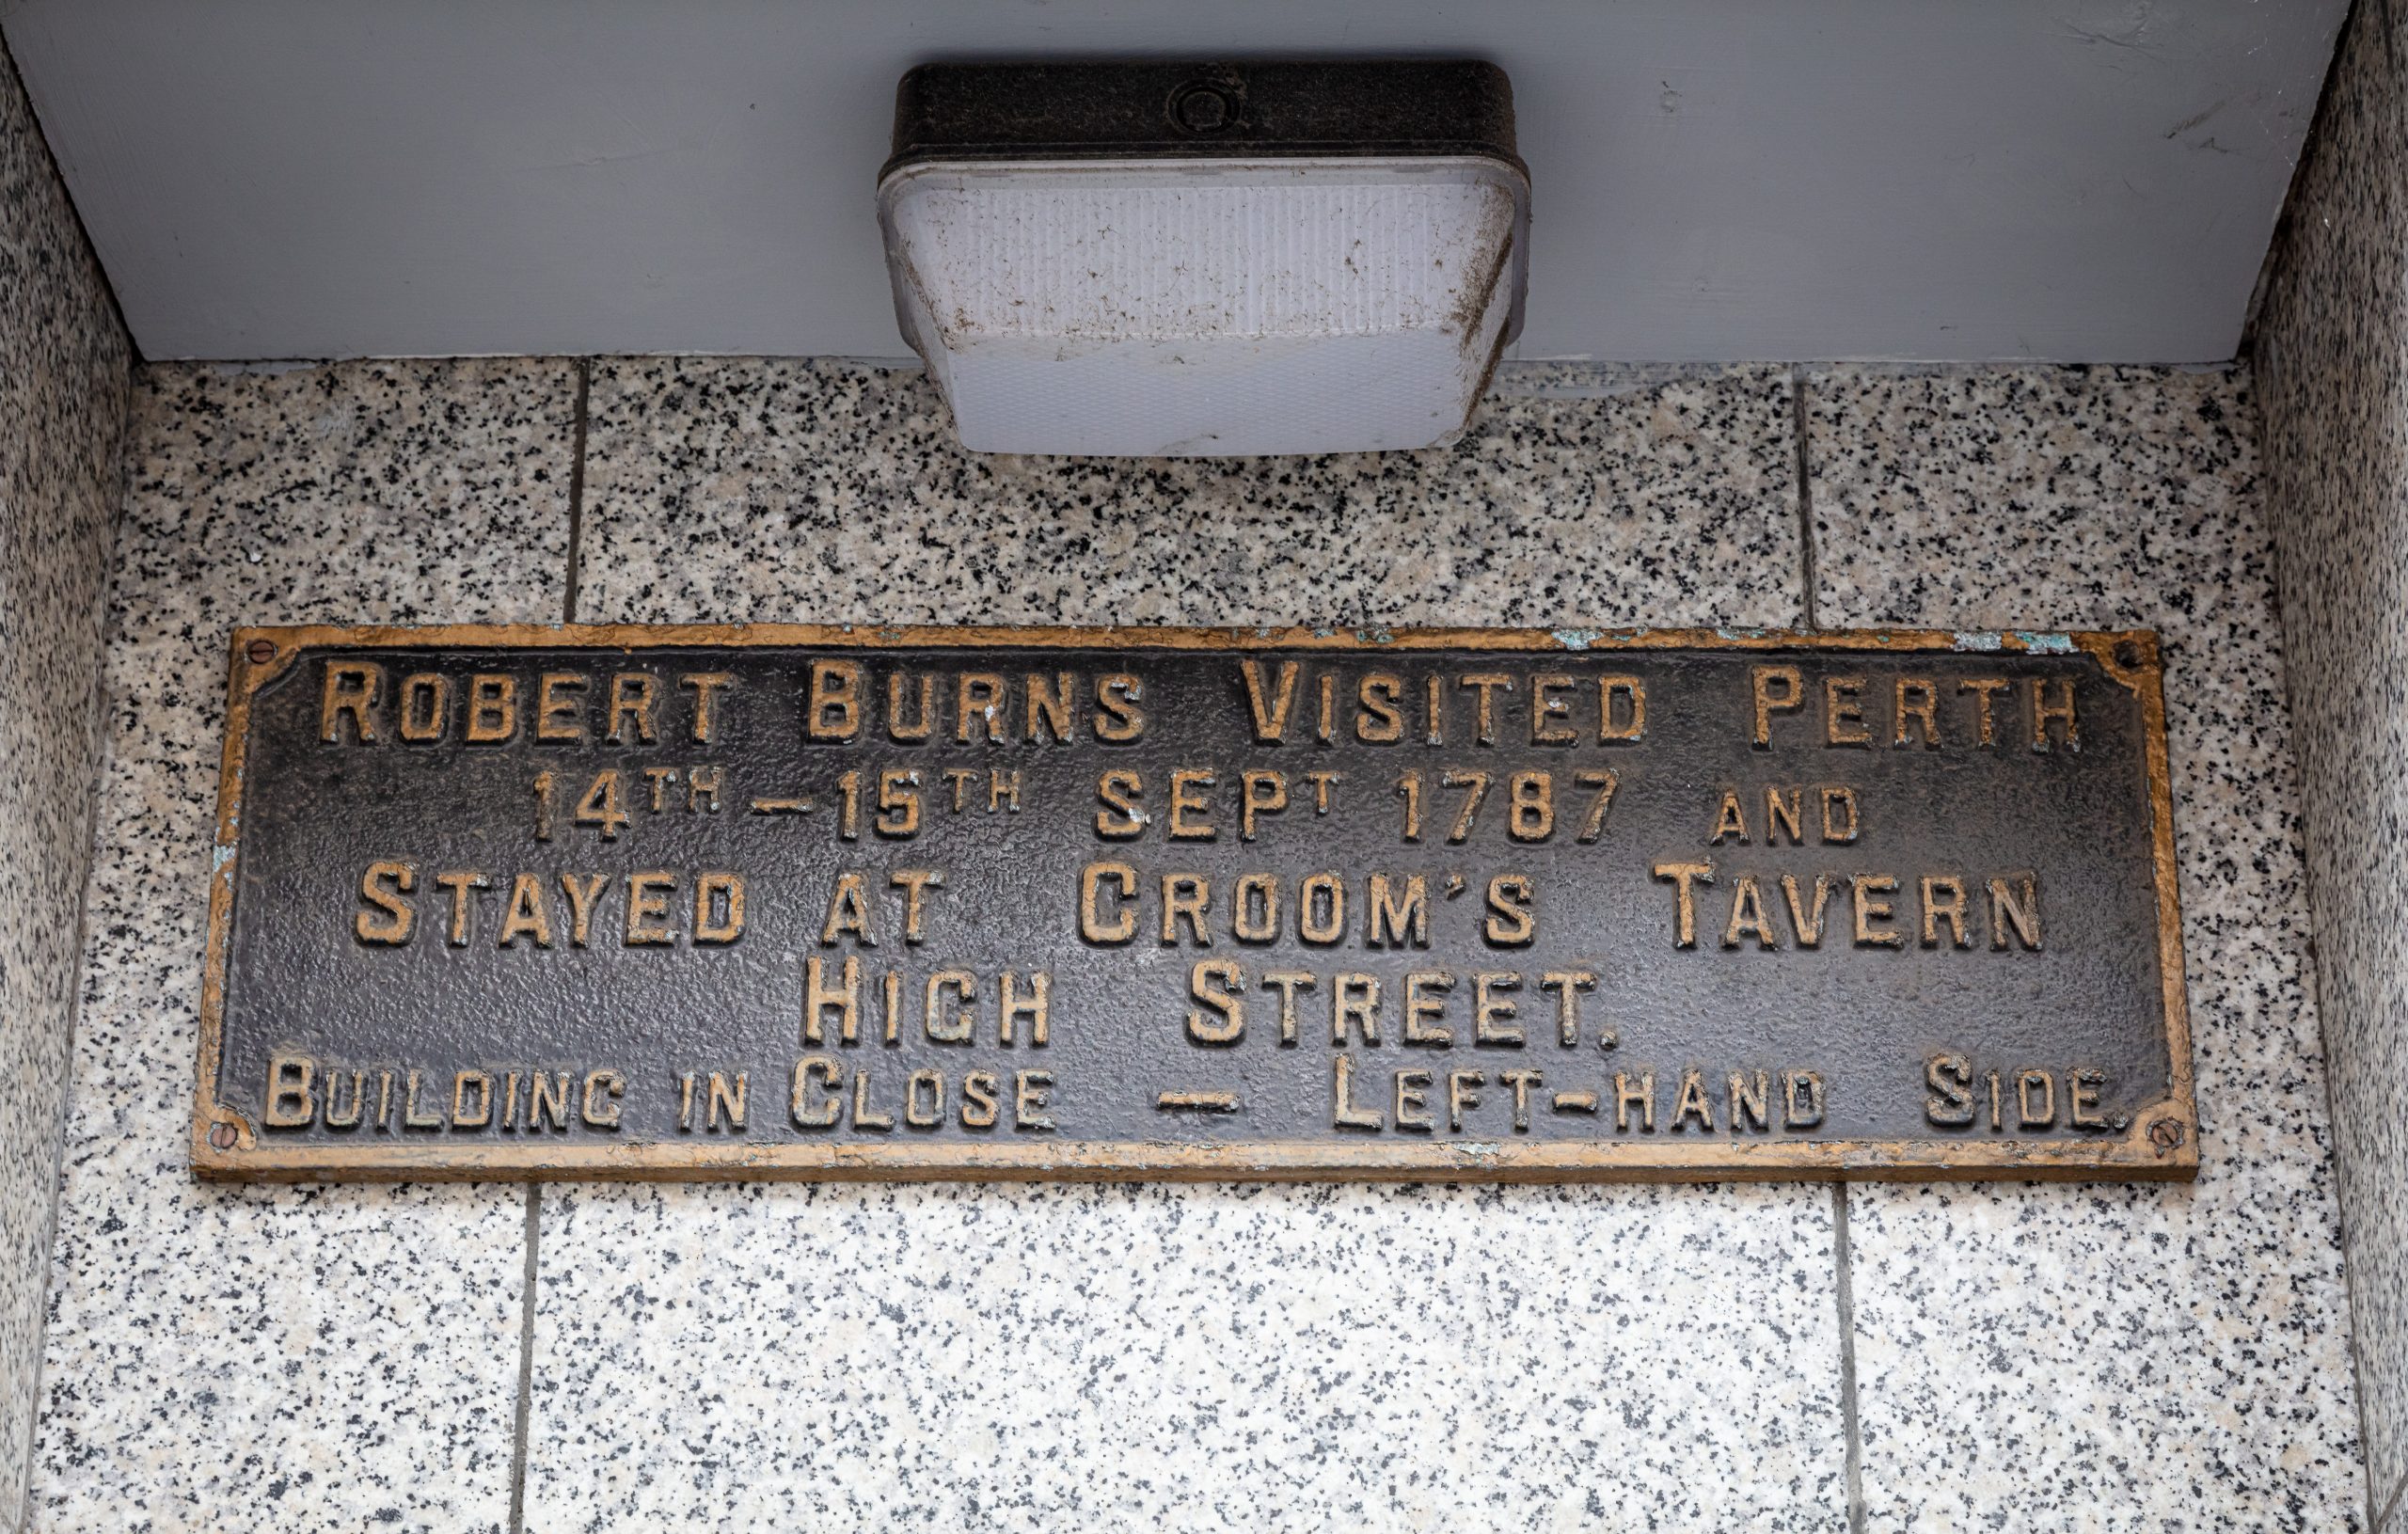 Visit to Perth by Robert Burns